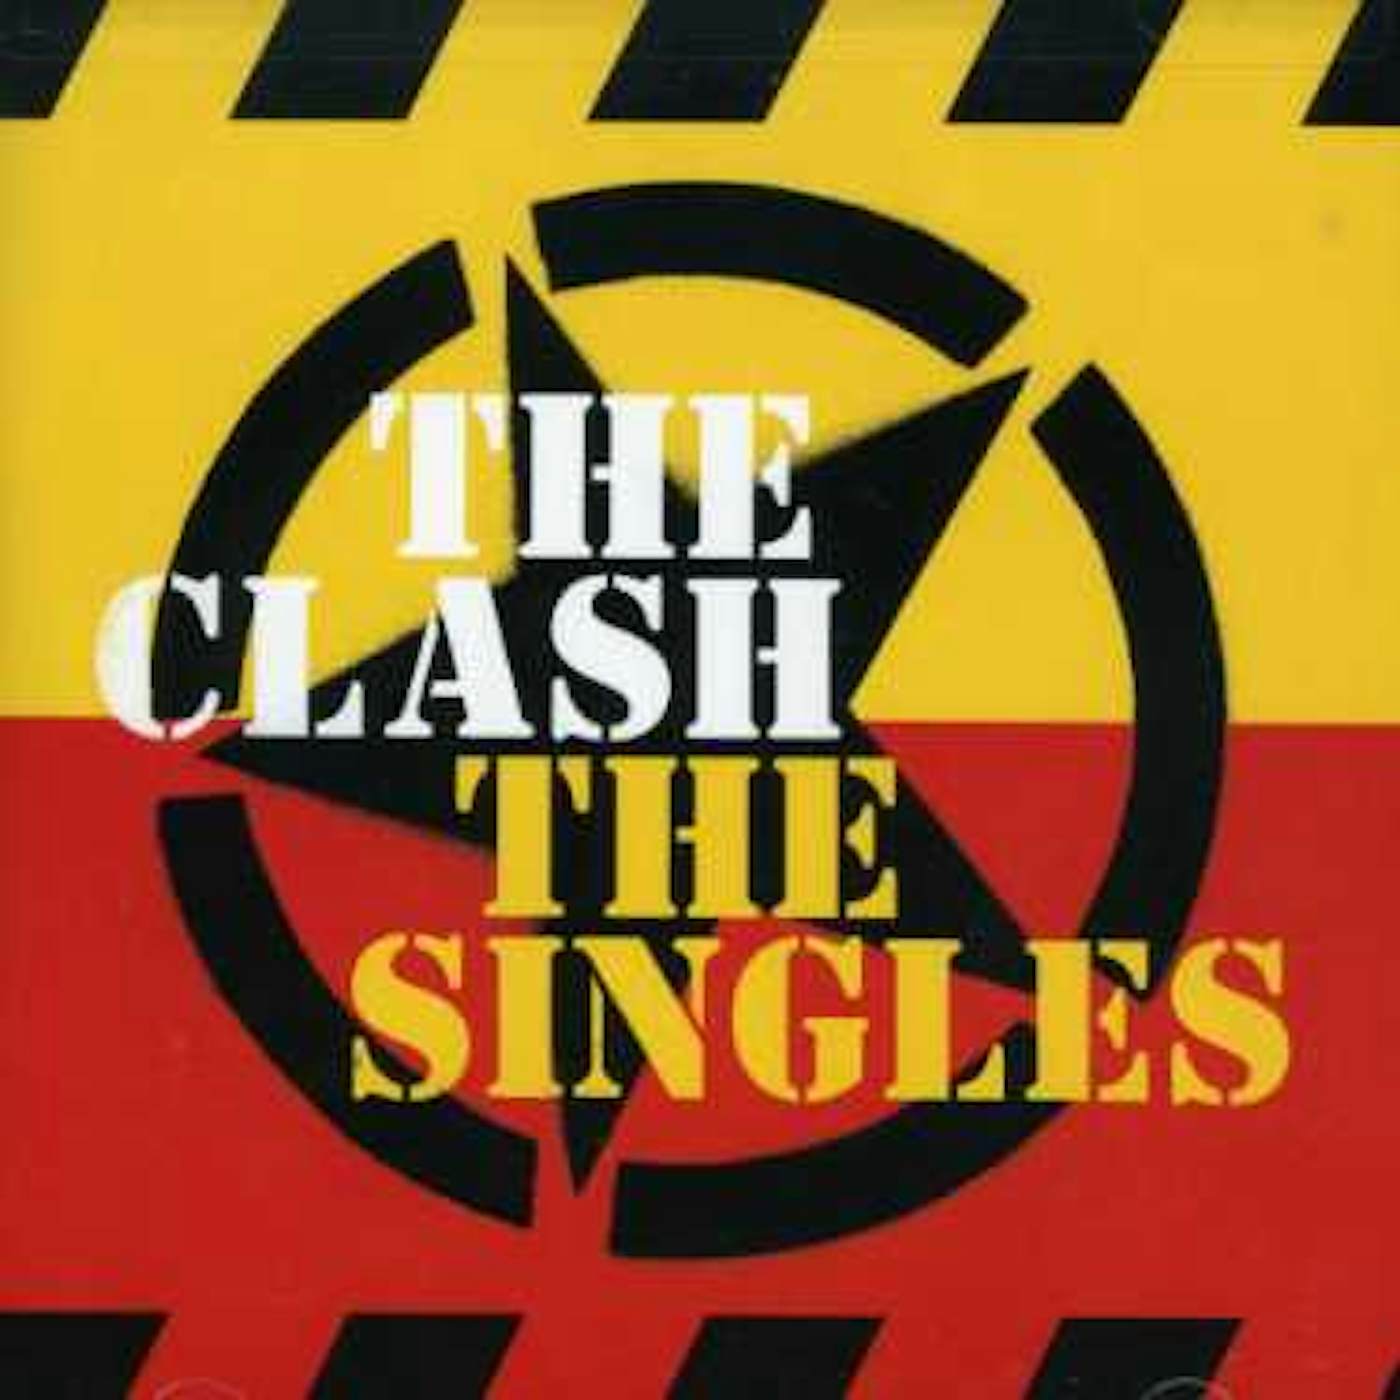 The Clash SINGLES CD